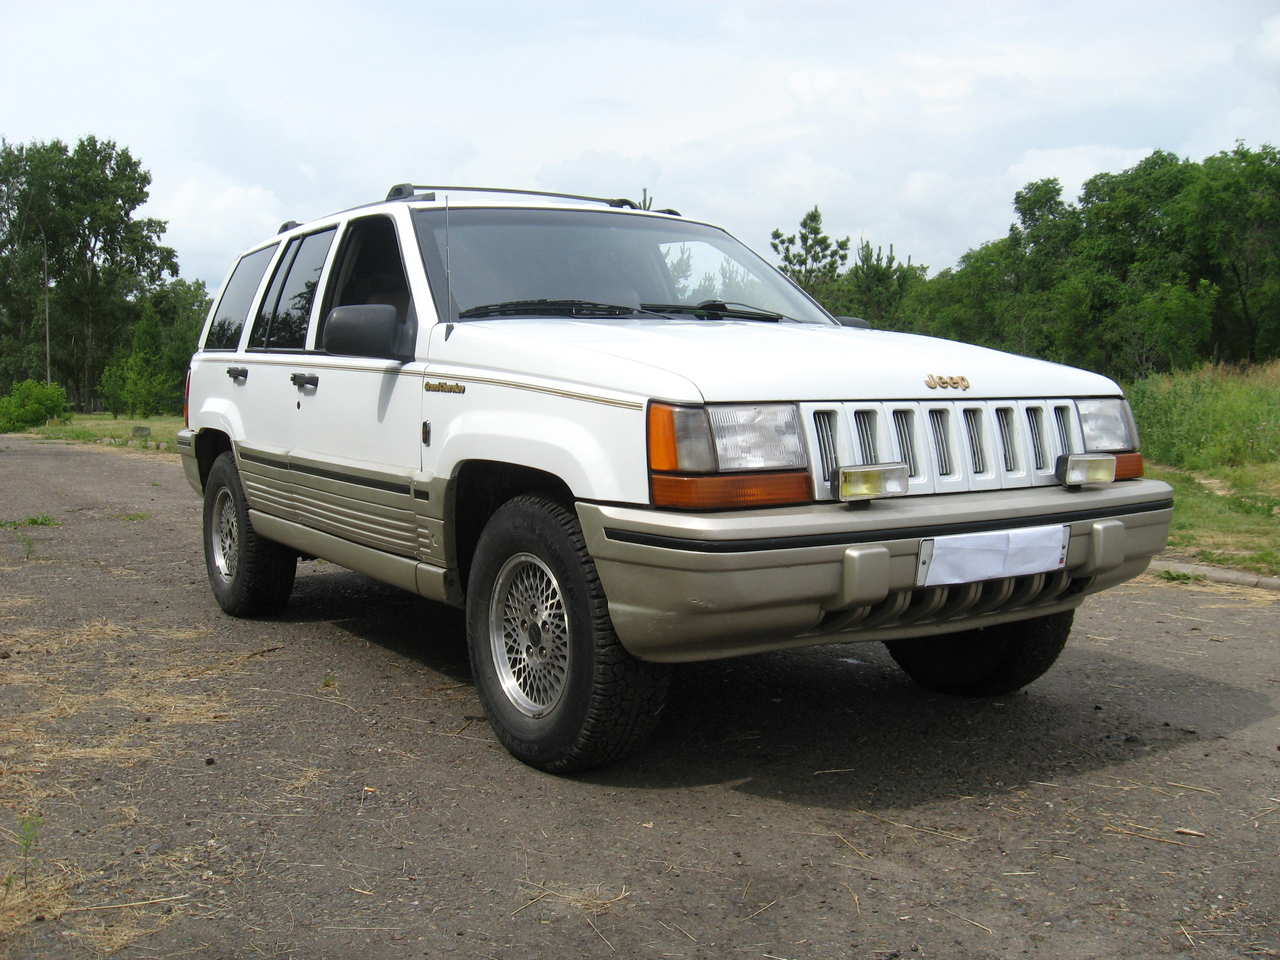 1993 Grand cherokee jeep #5